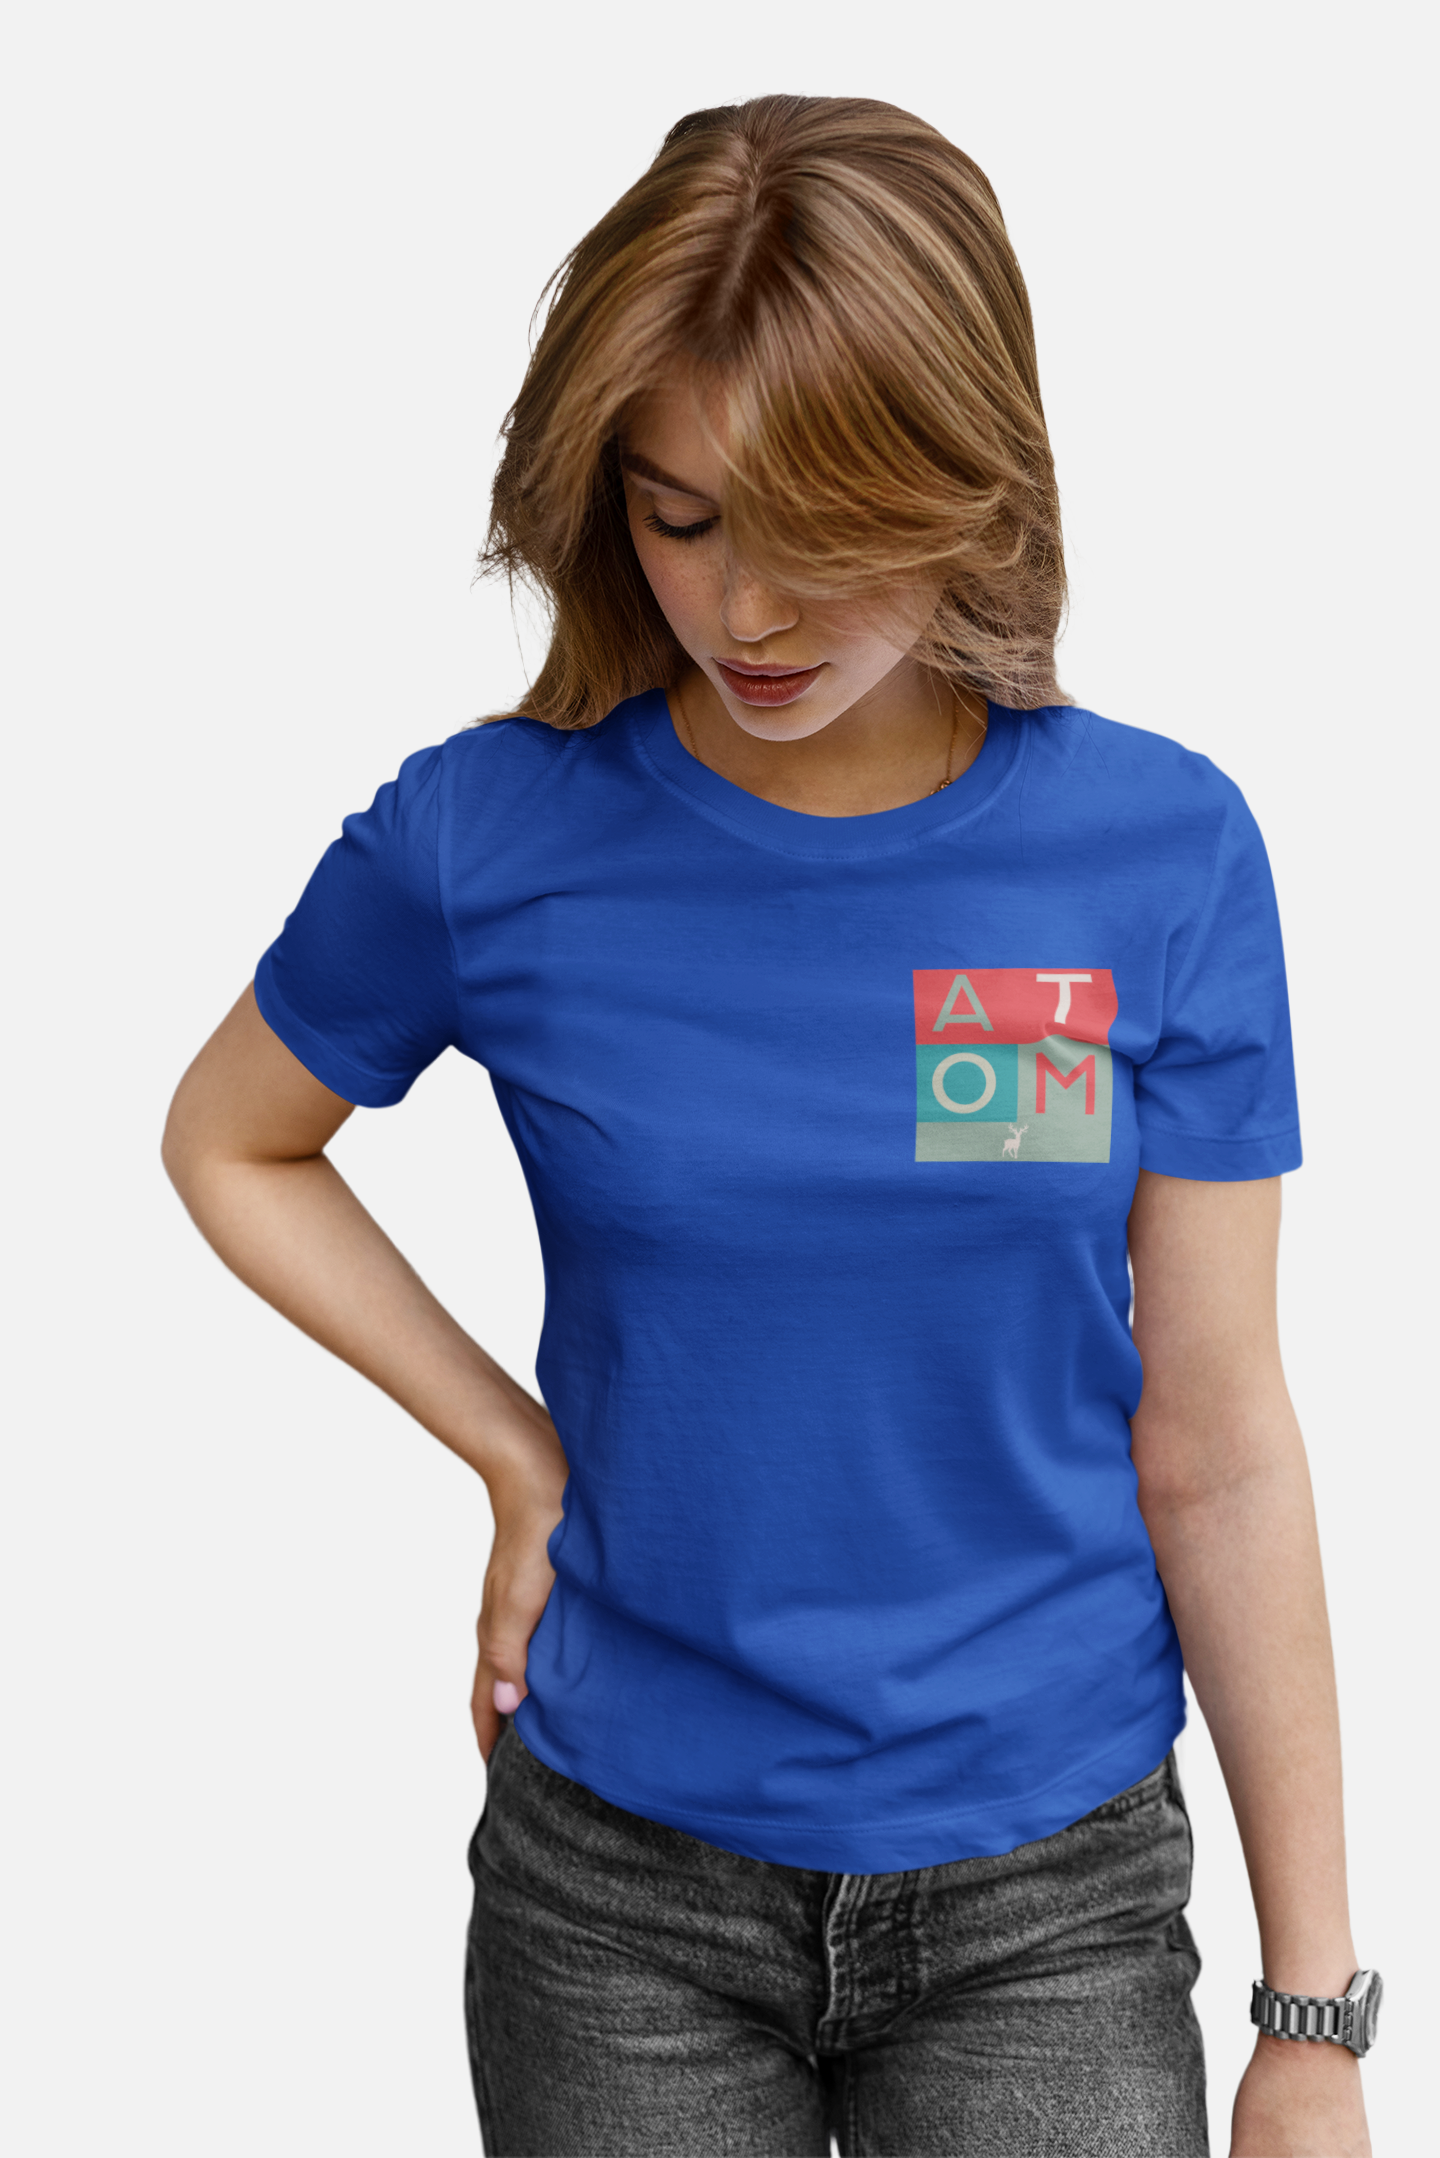 ATOM Signature Pocket Square Logo Royal Blue T-Shirt For Women